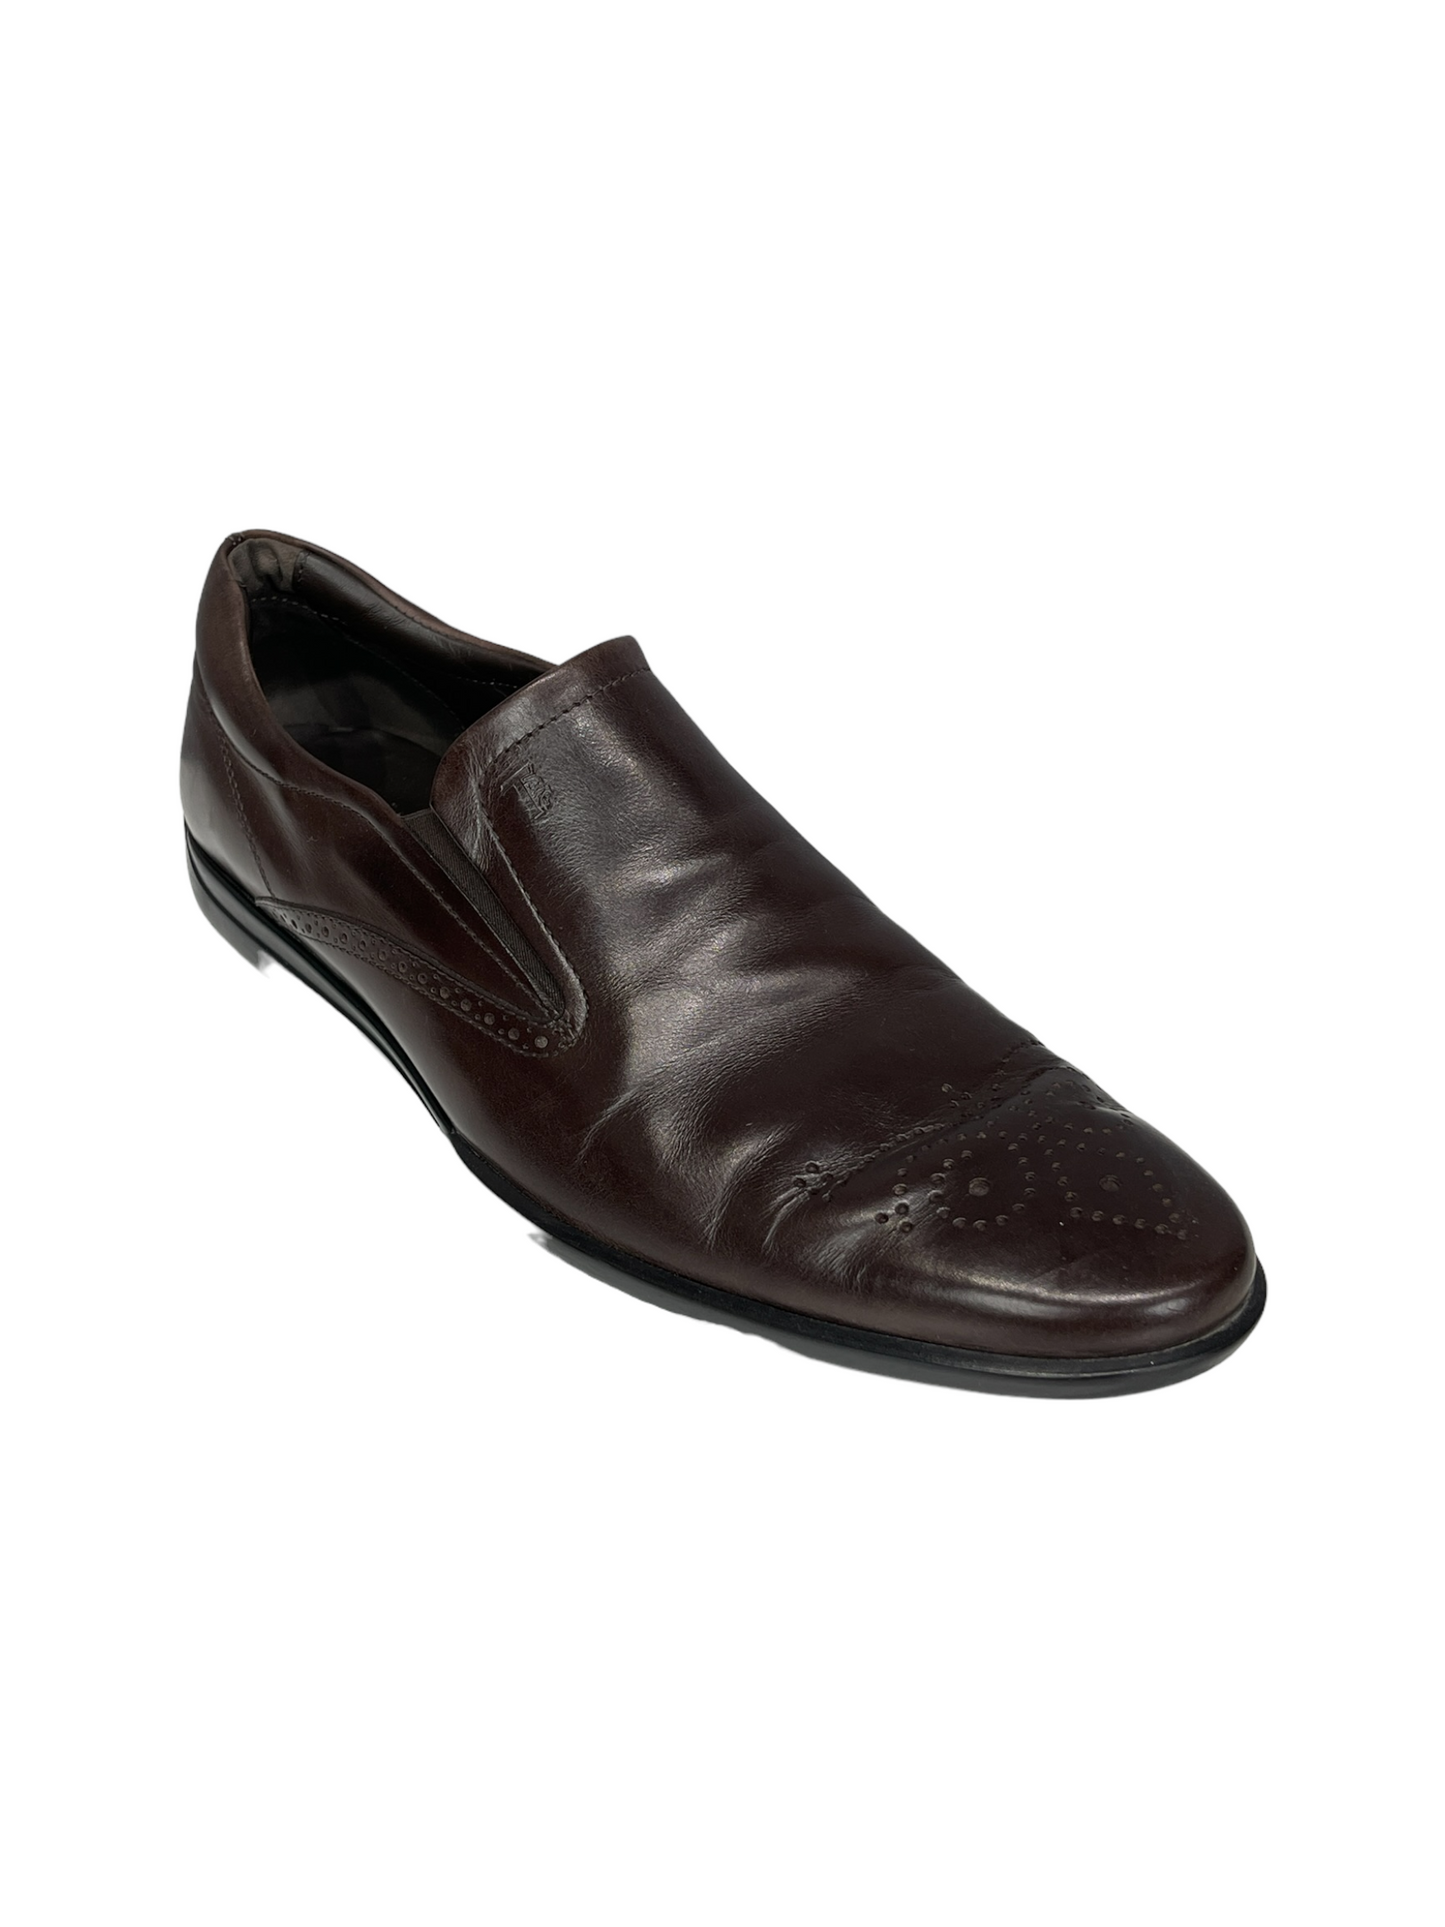 Tods Dark Brown Leather Slipper Loafer